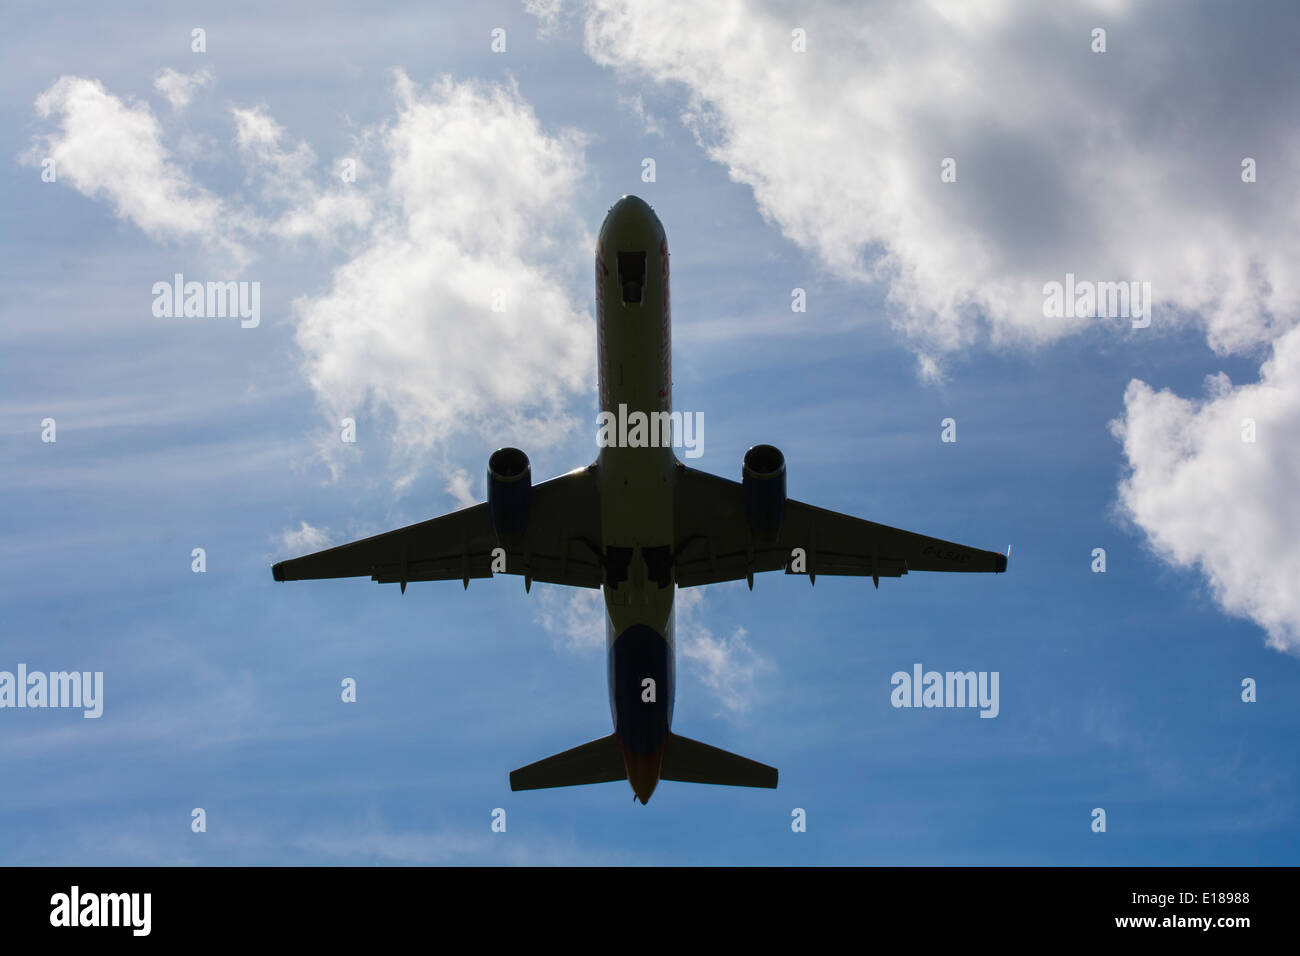 Passenger jet taking off Stock Photo